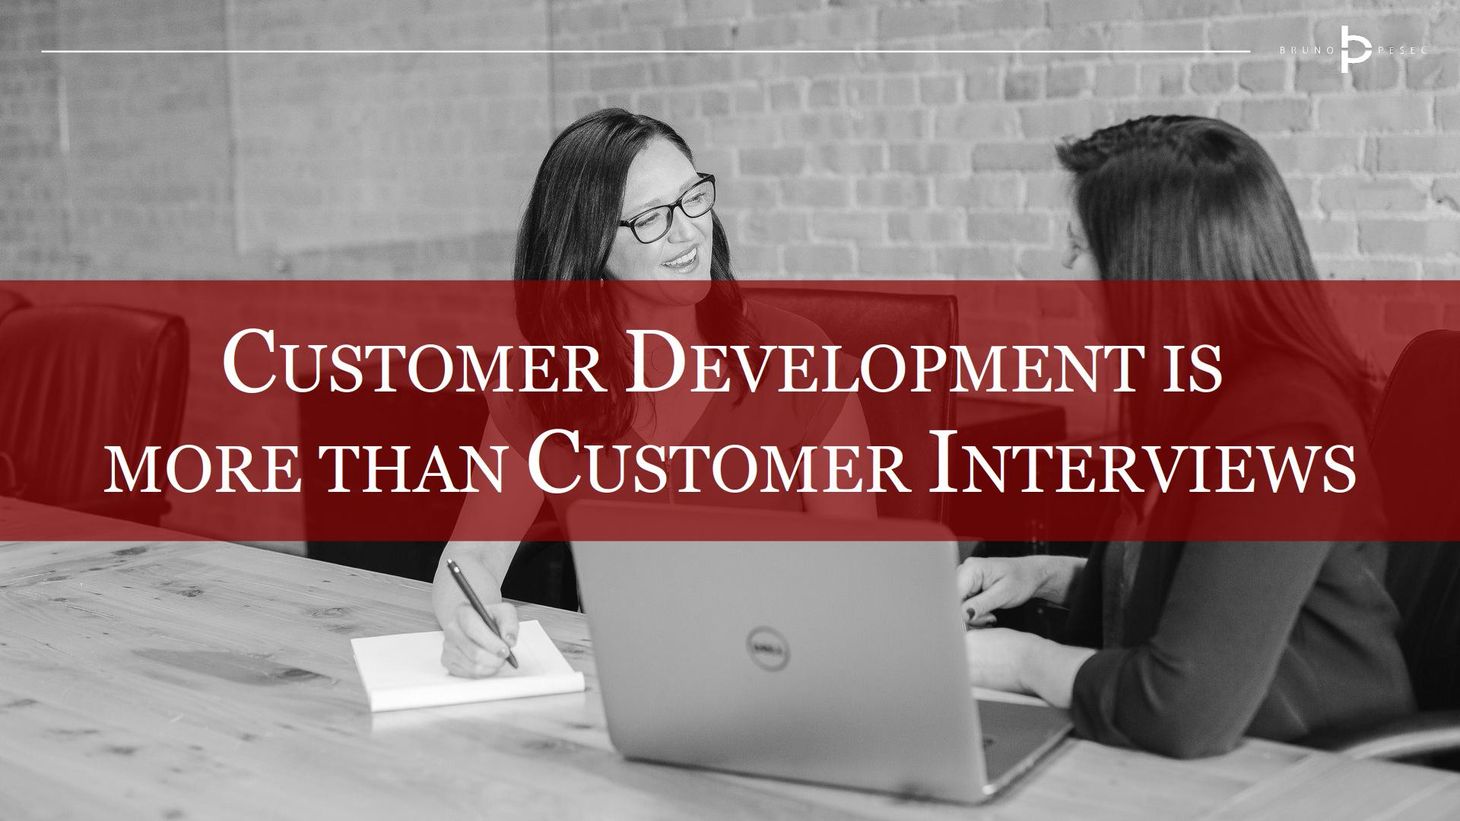 Customer development is more than customer interviews